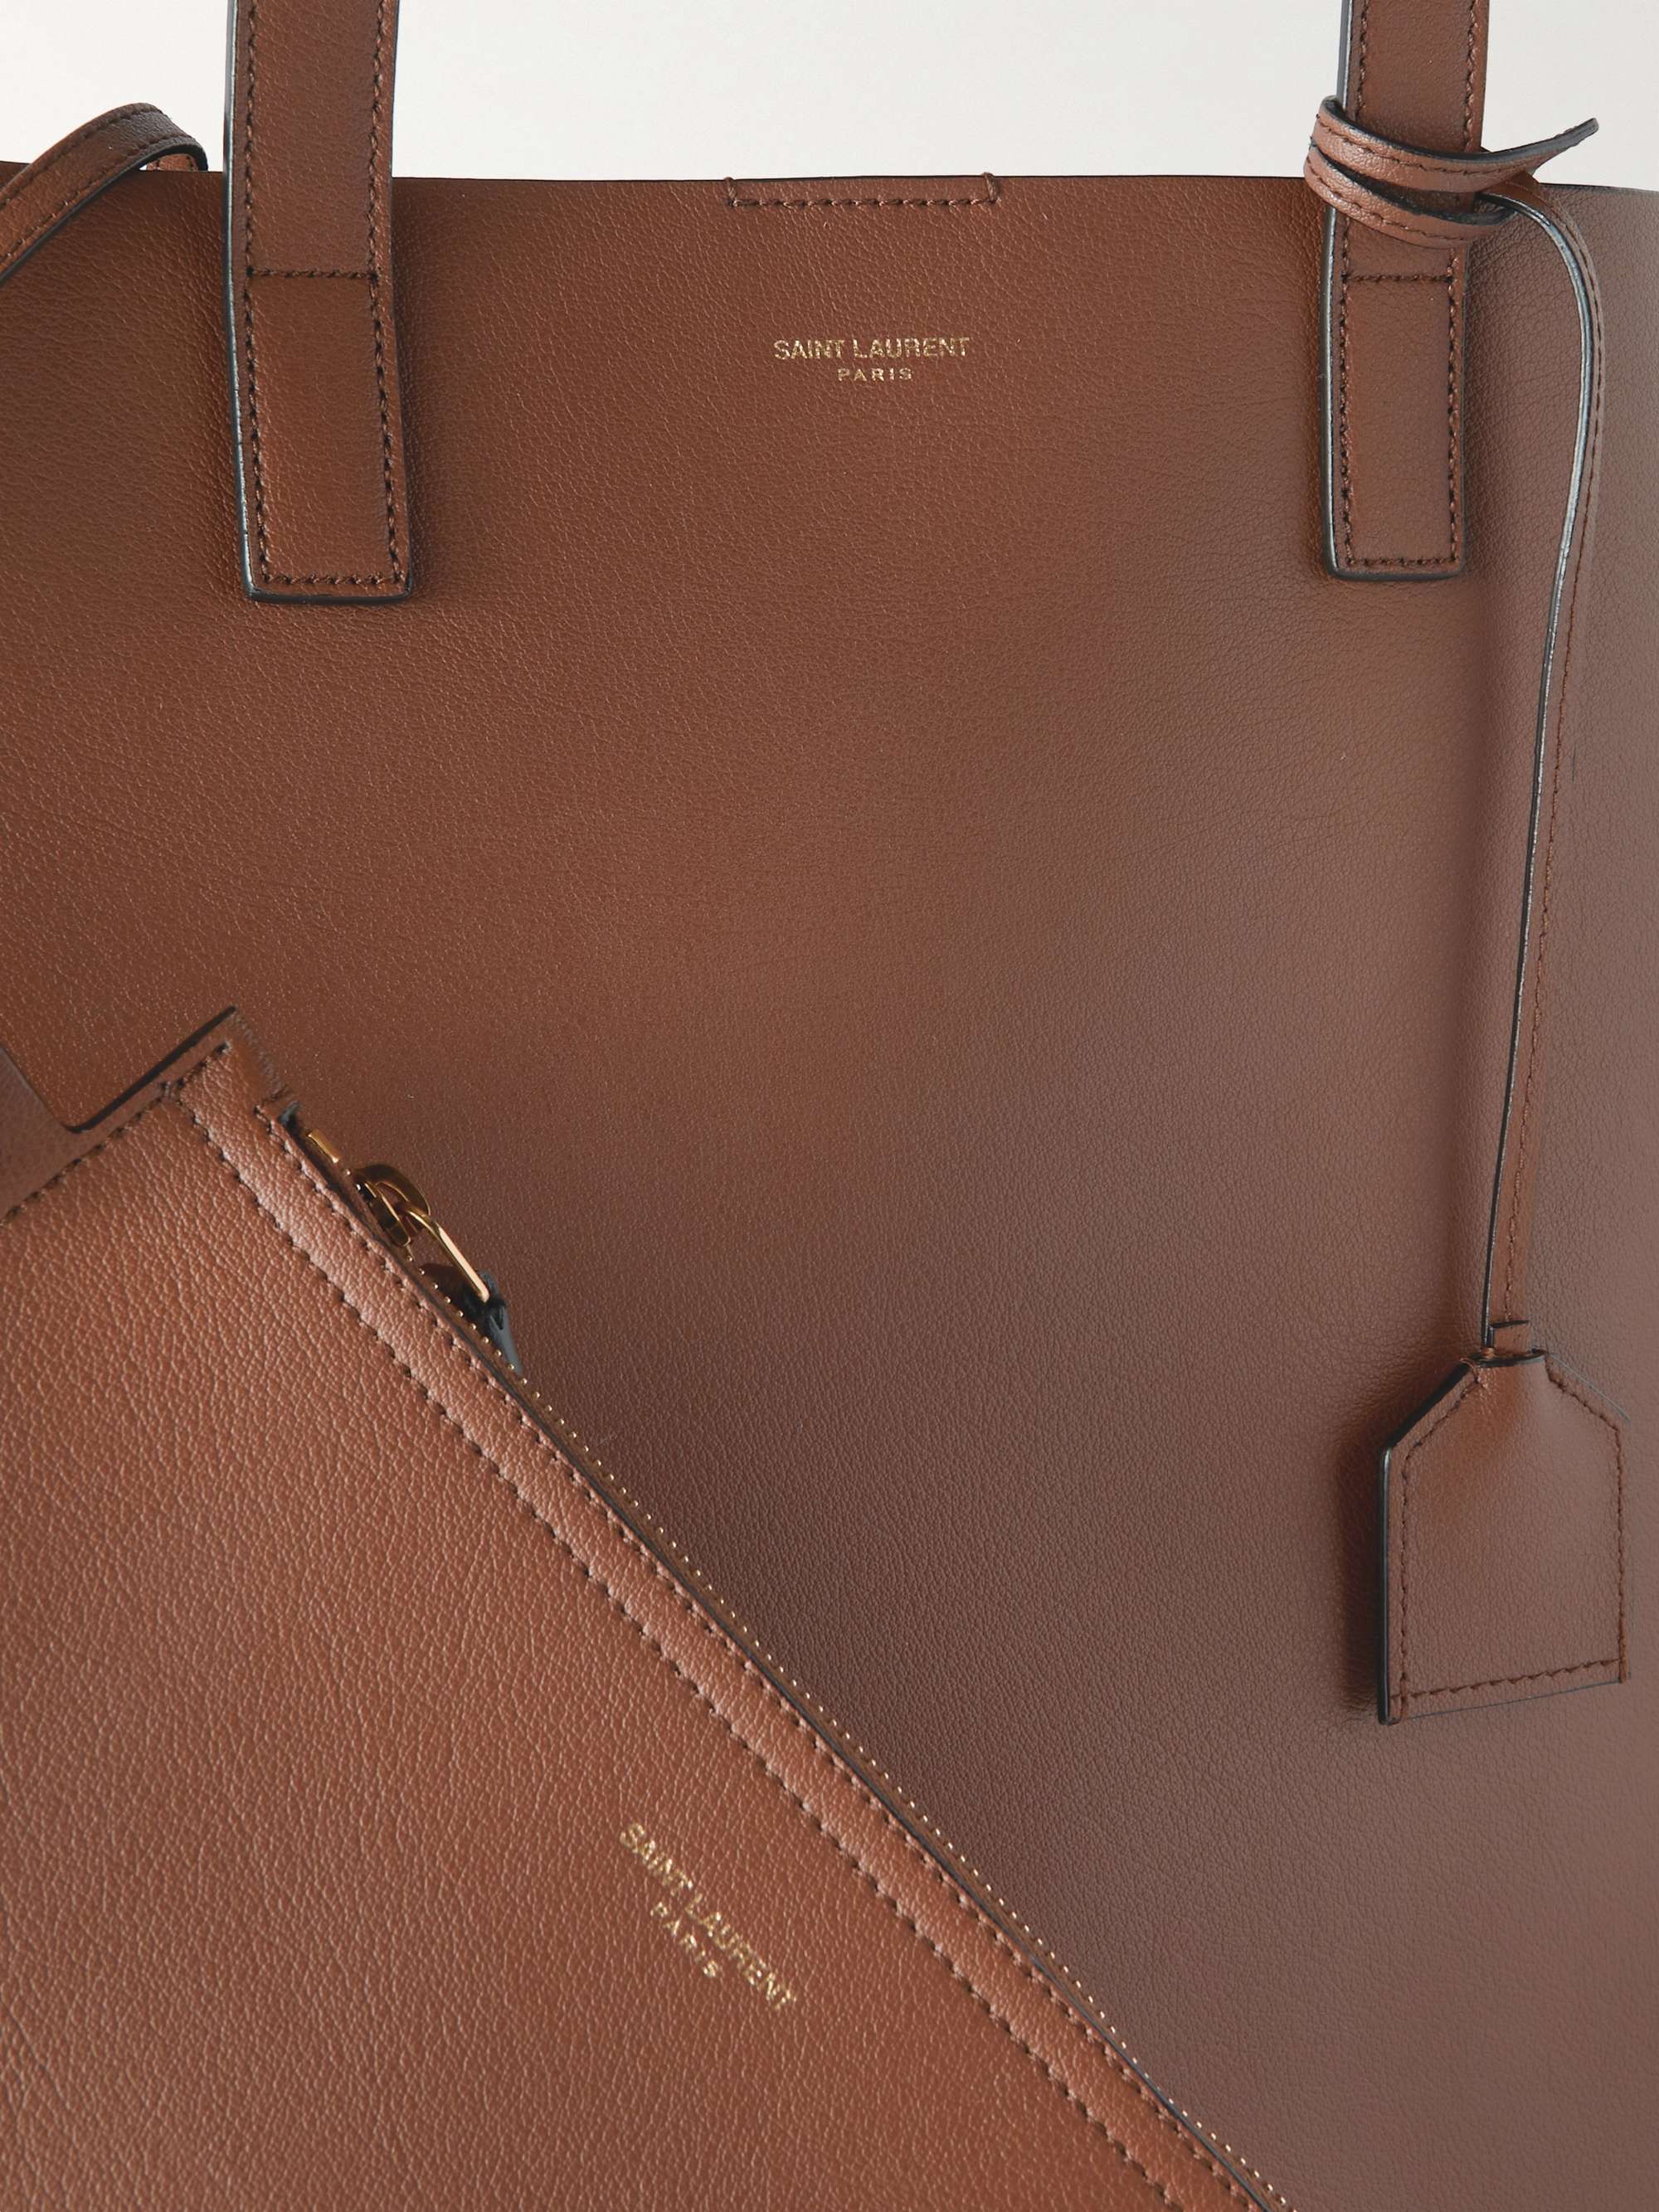 SAINT LAURENT Leather Tote Bag